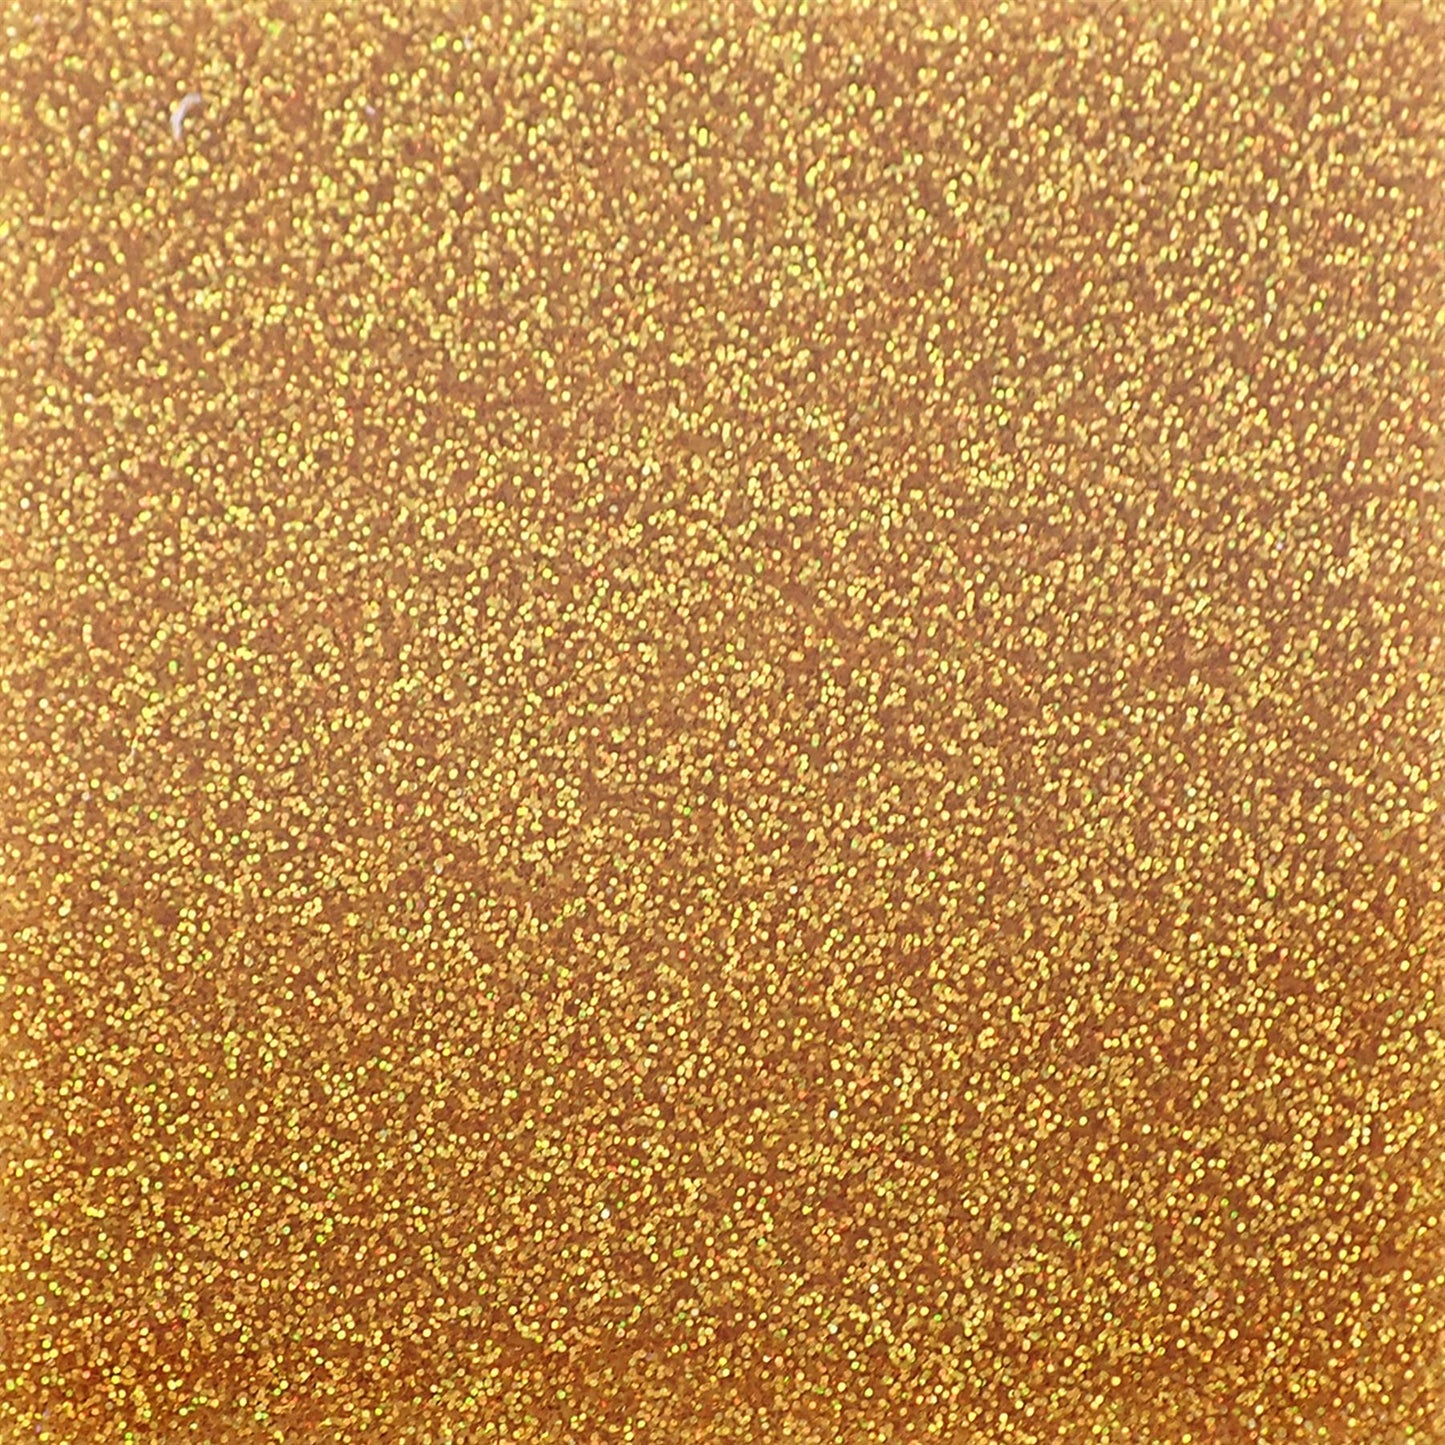 Incudo Dark Gold 2-Sided Holographic Glitter Acrylic Sheet - 400x300x3mm (15.7x11.81x0.12")